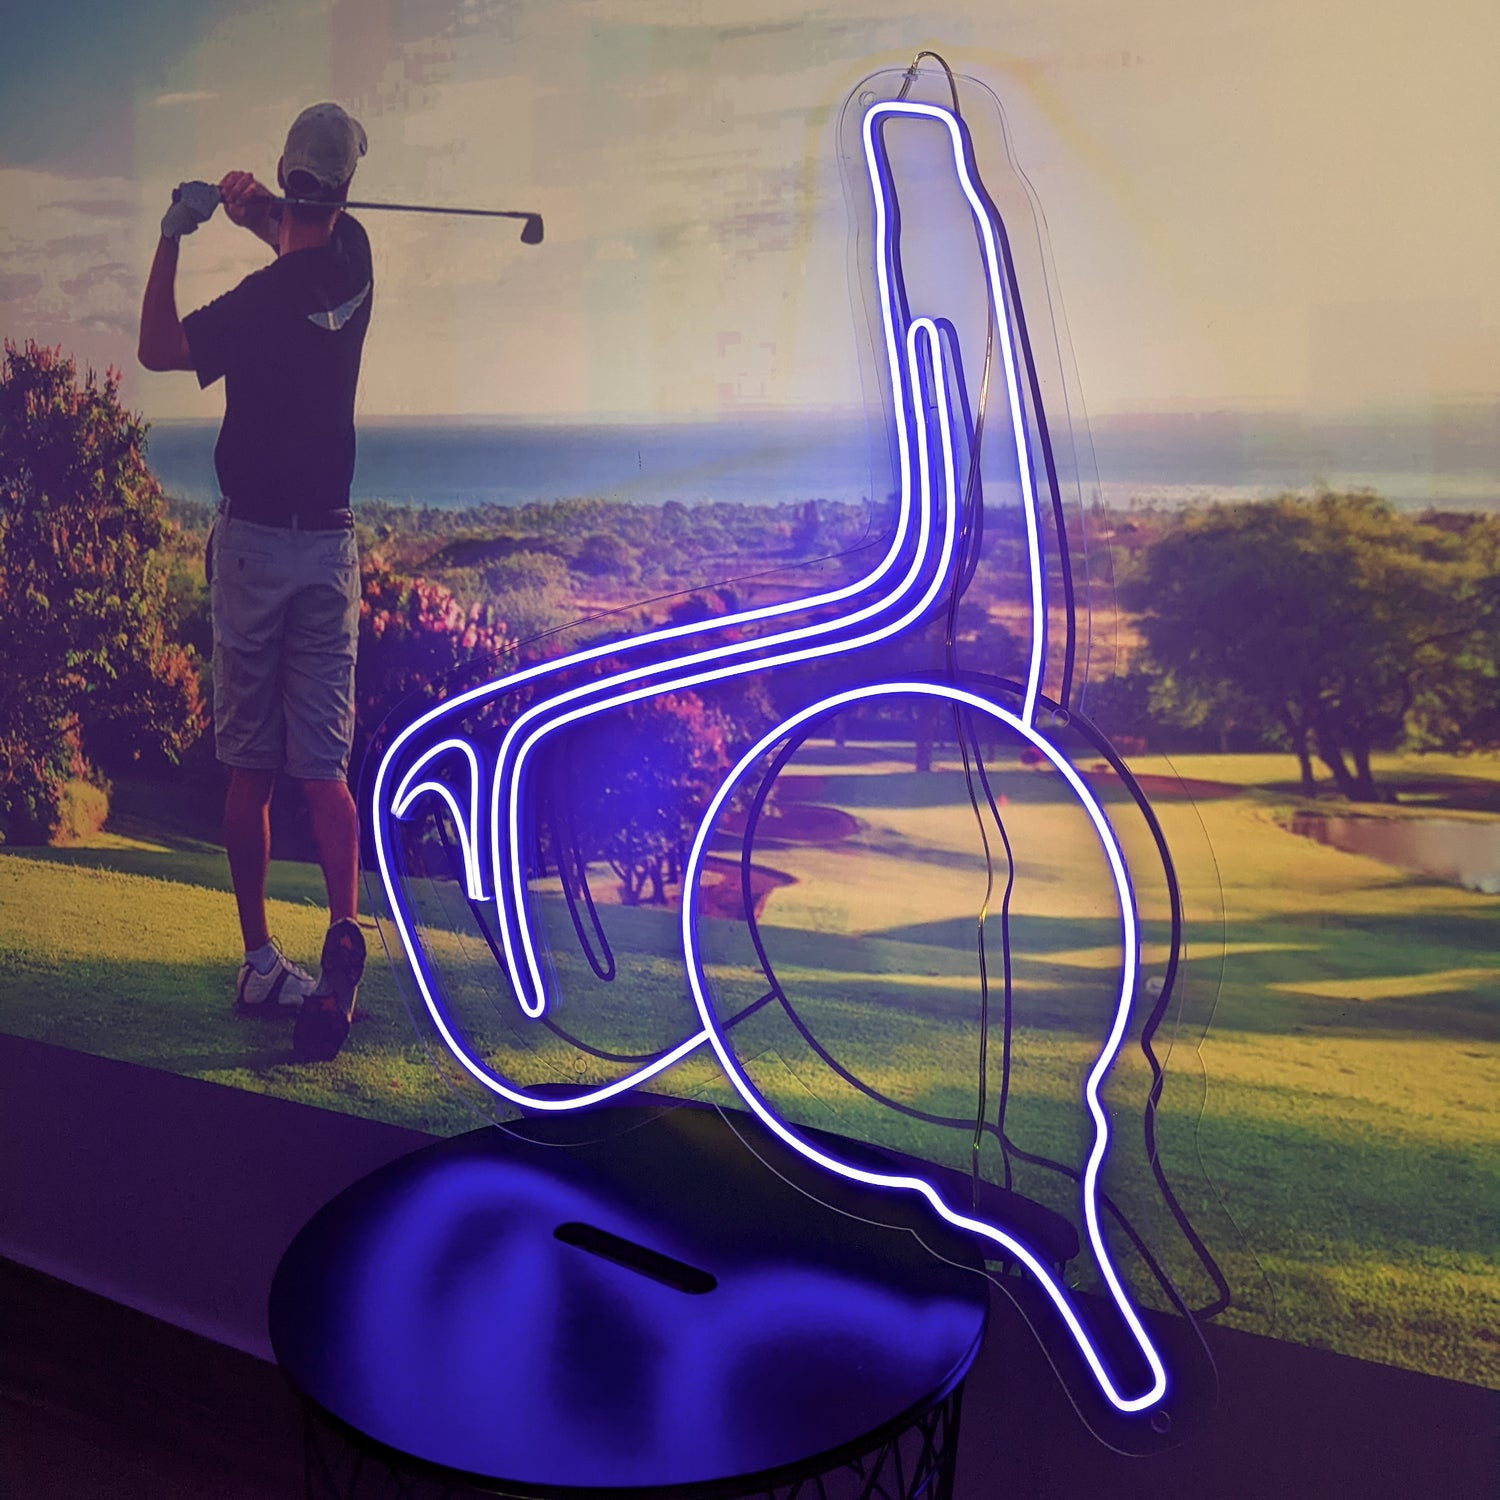 Top Golf Las Vegas & Graybar Choose Vivid S LED Neon - LED Neon Flex